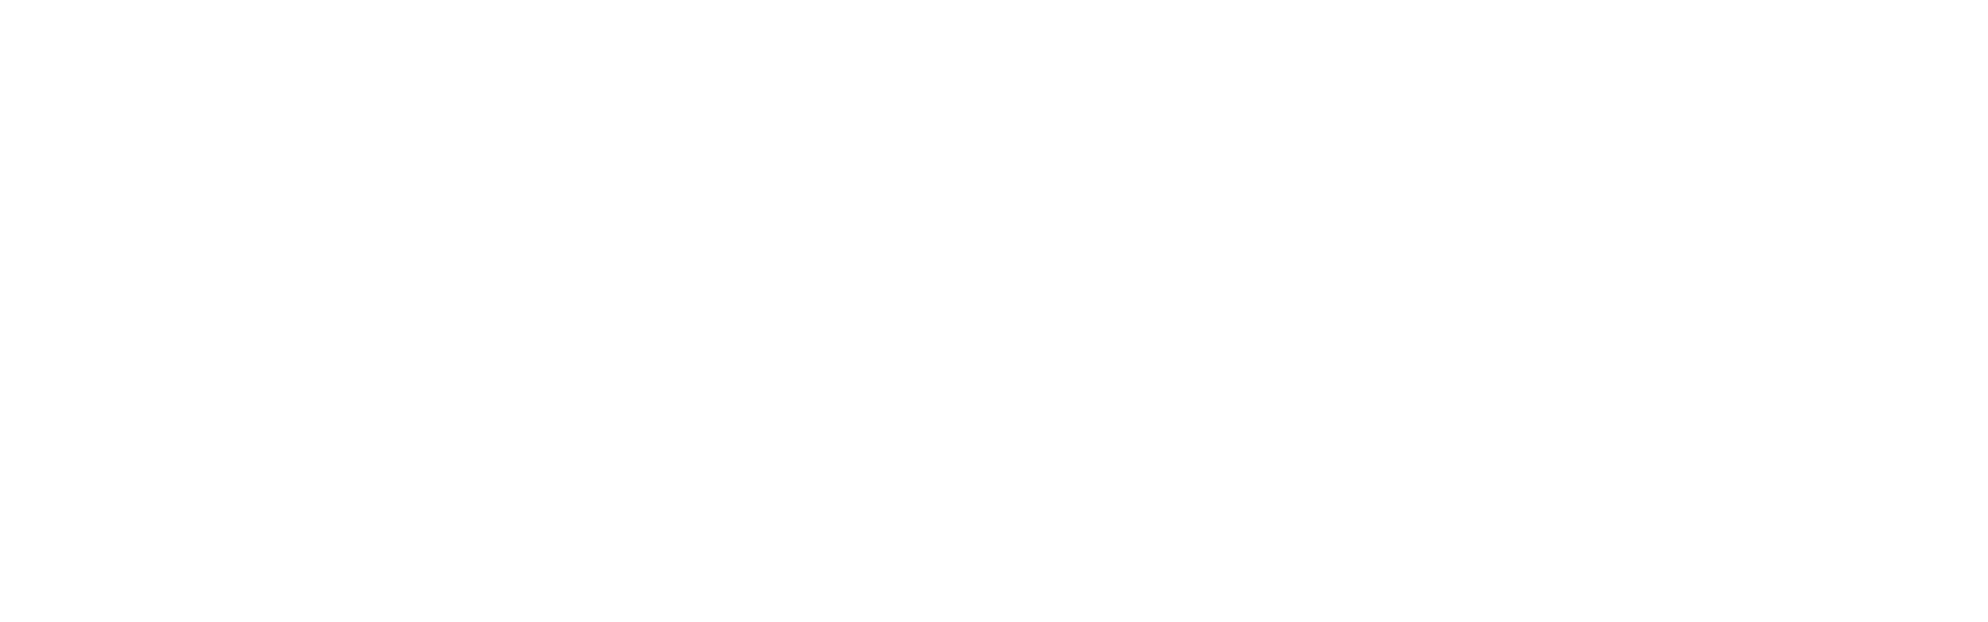 OpenFF Fragmenter documentation logo